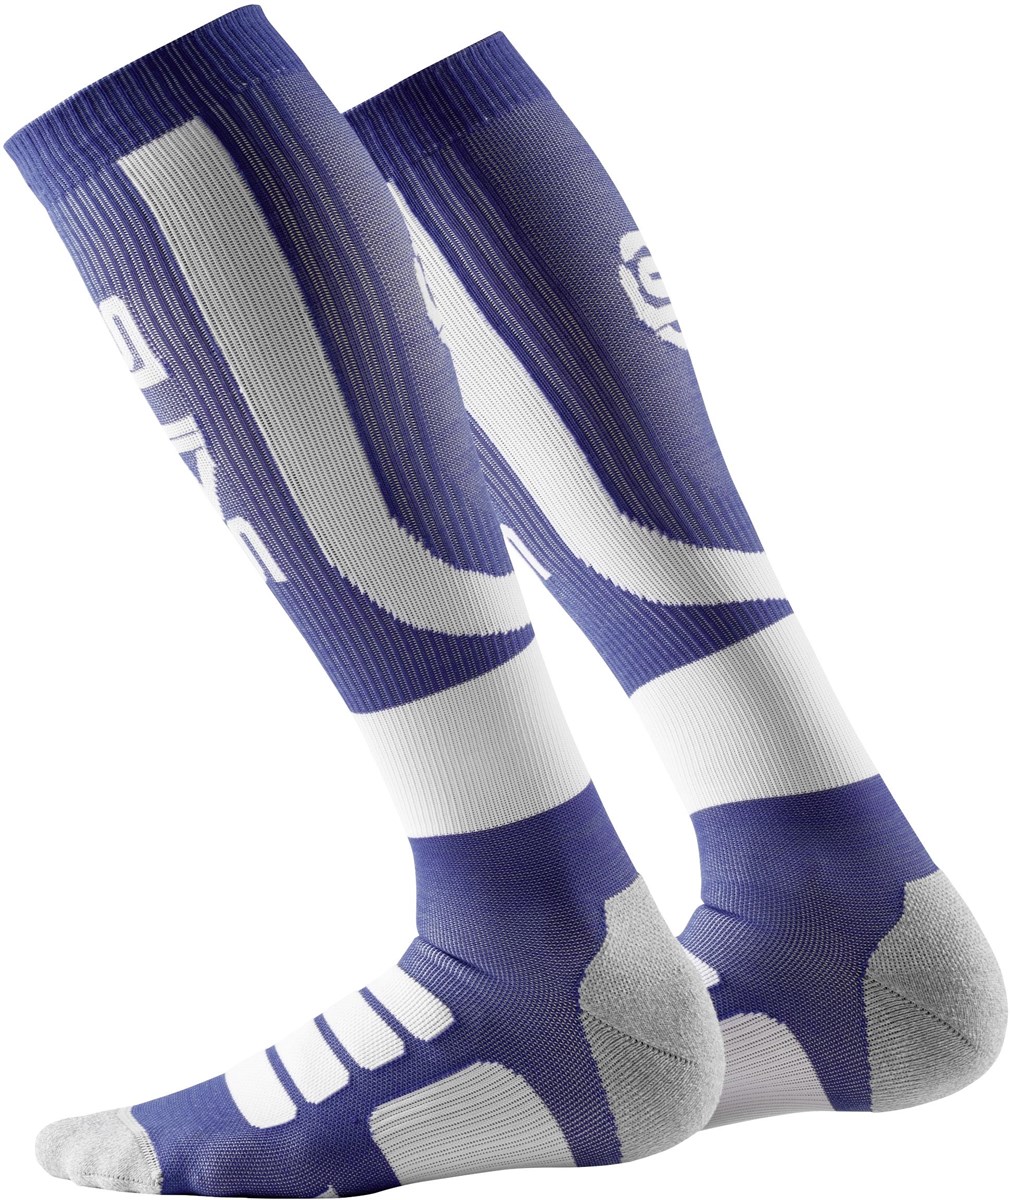 Skins Essentials Performance Compression Socks product image